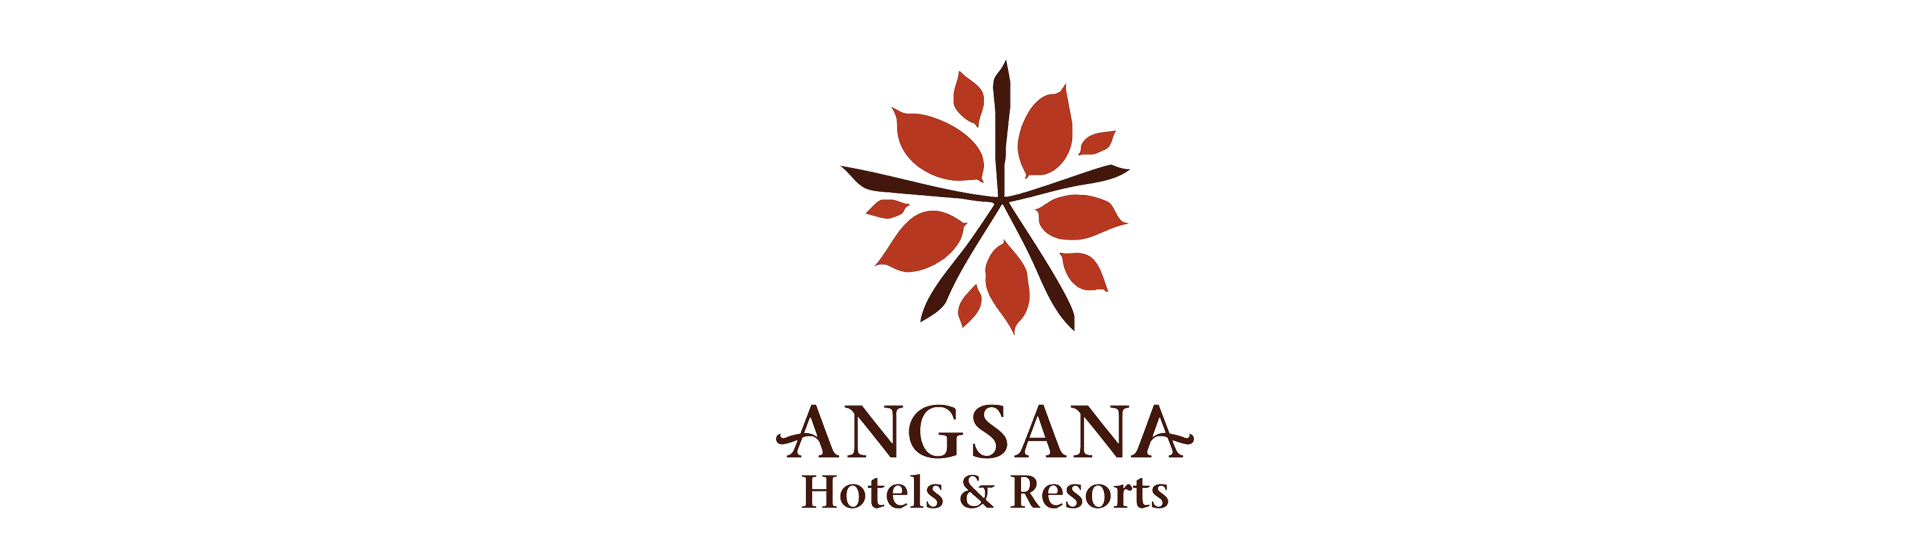 Logotipo Hoteles Agnsana Cuba